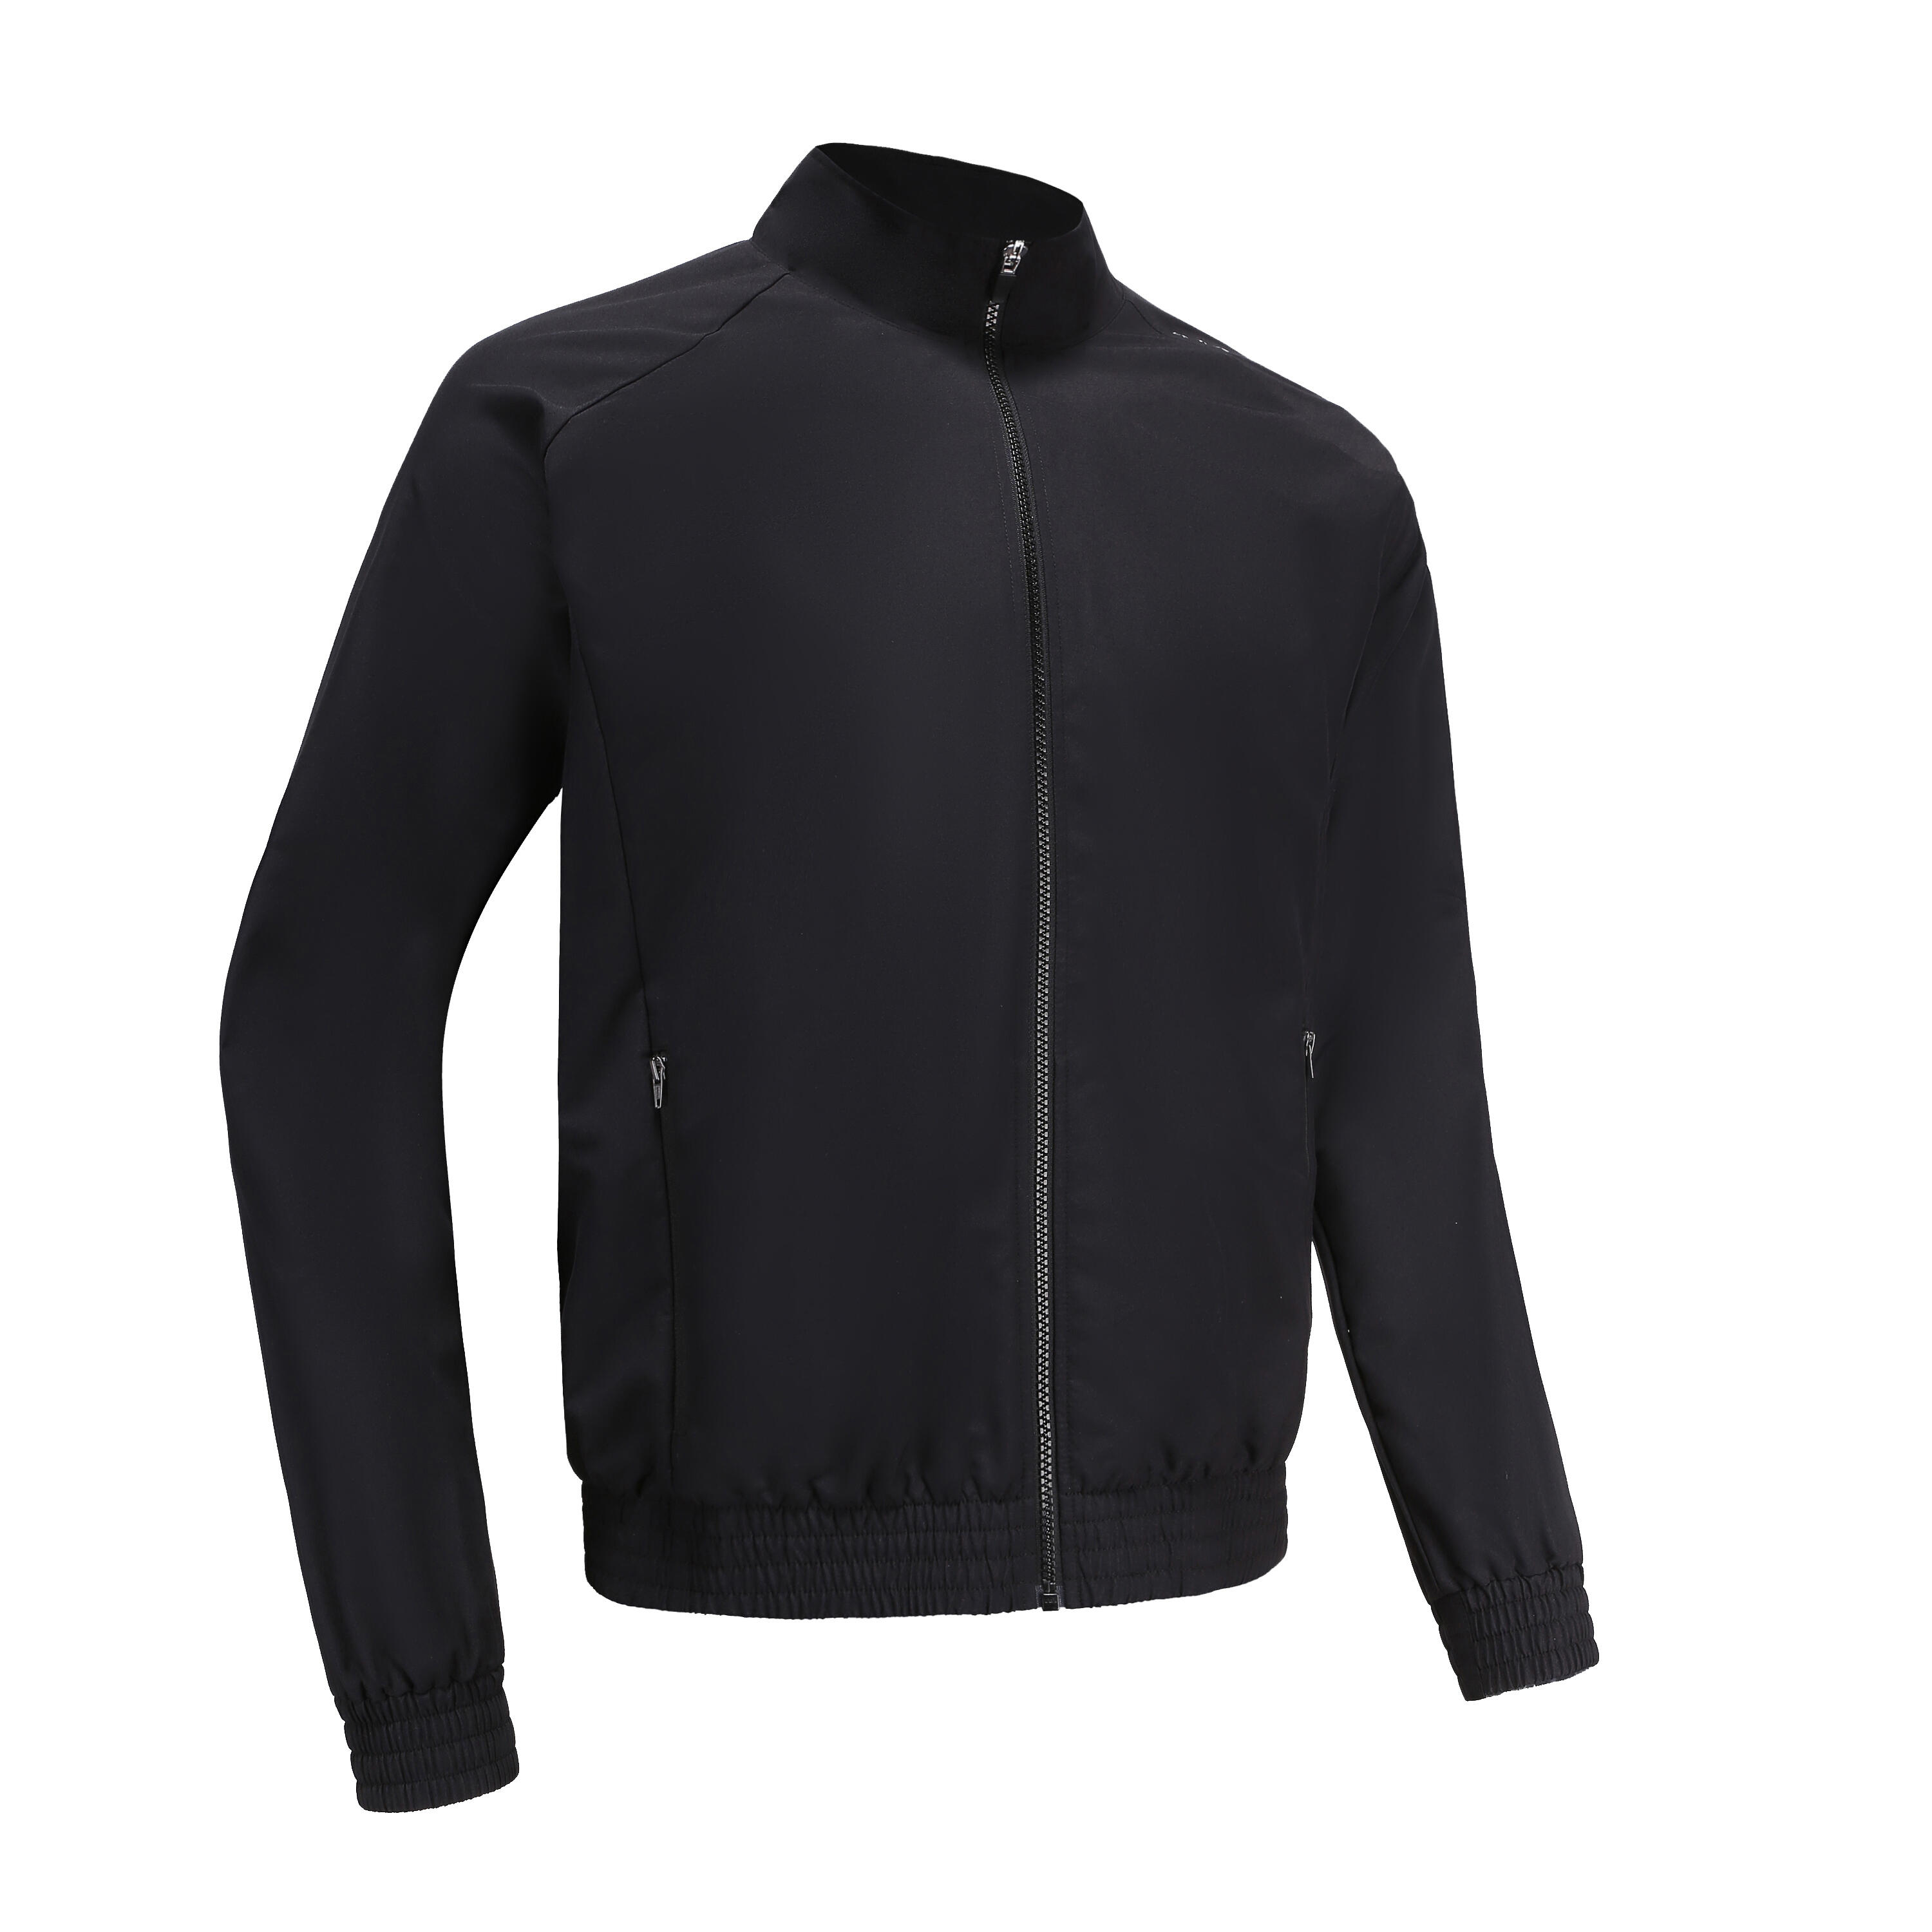 Men's Fitness Standard Breathable Jacket - Black 8/8